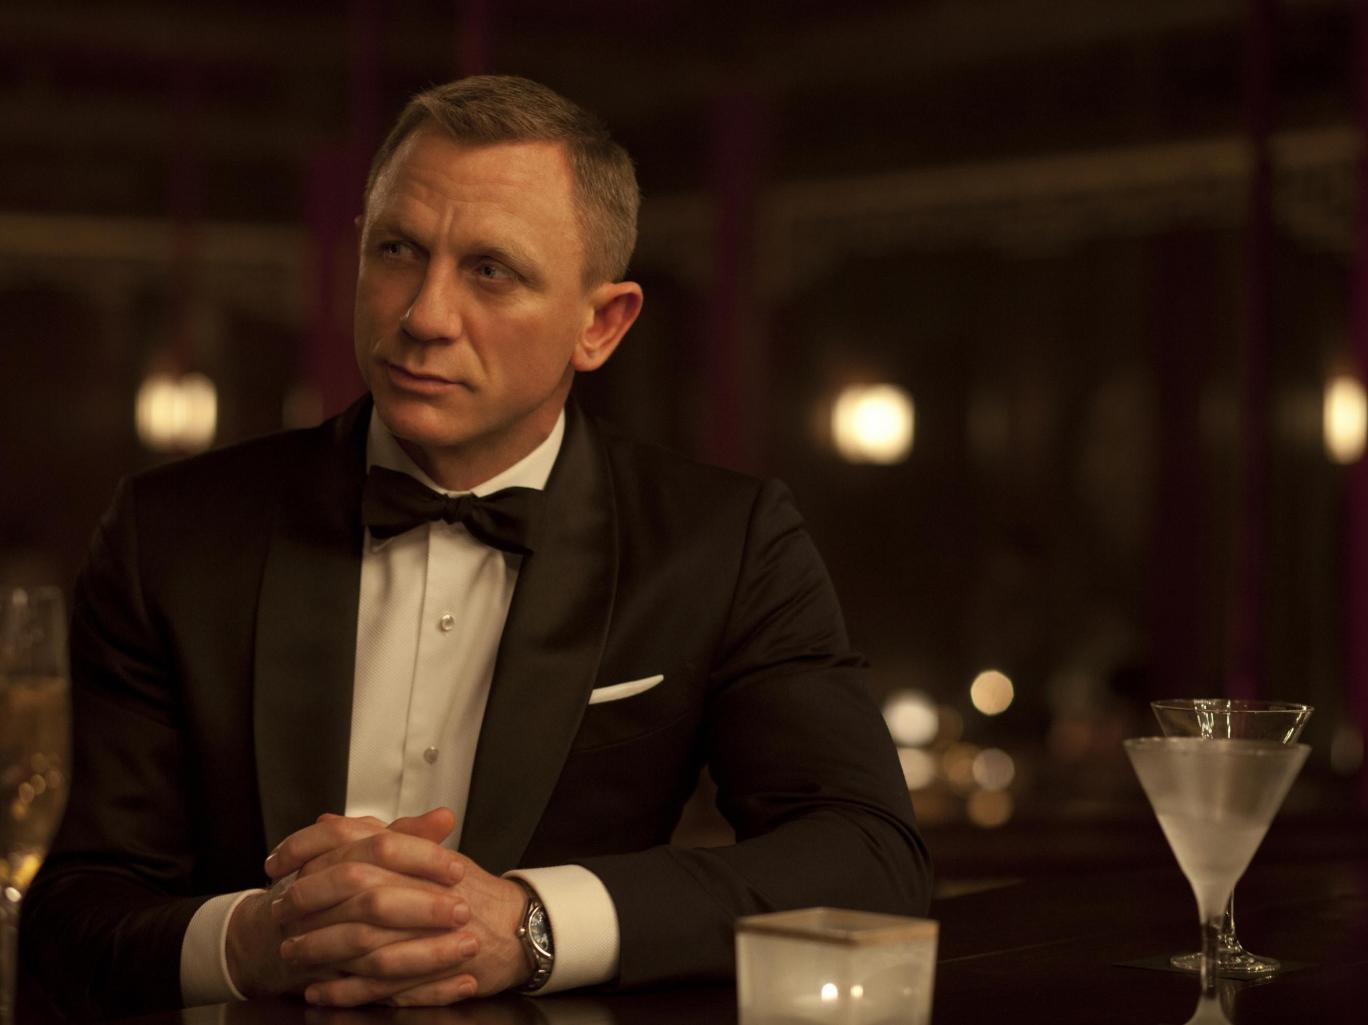 James Bond Backgrounds on Wallpapers Vista